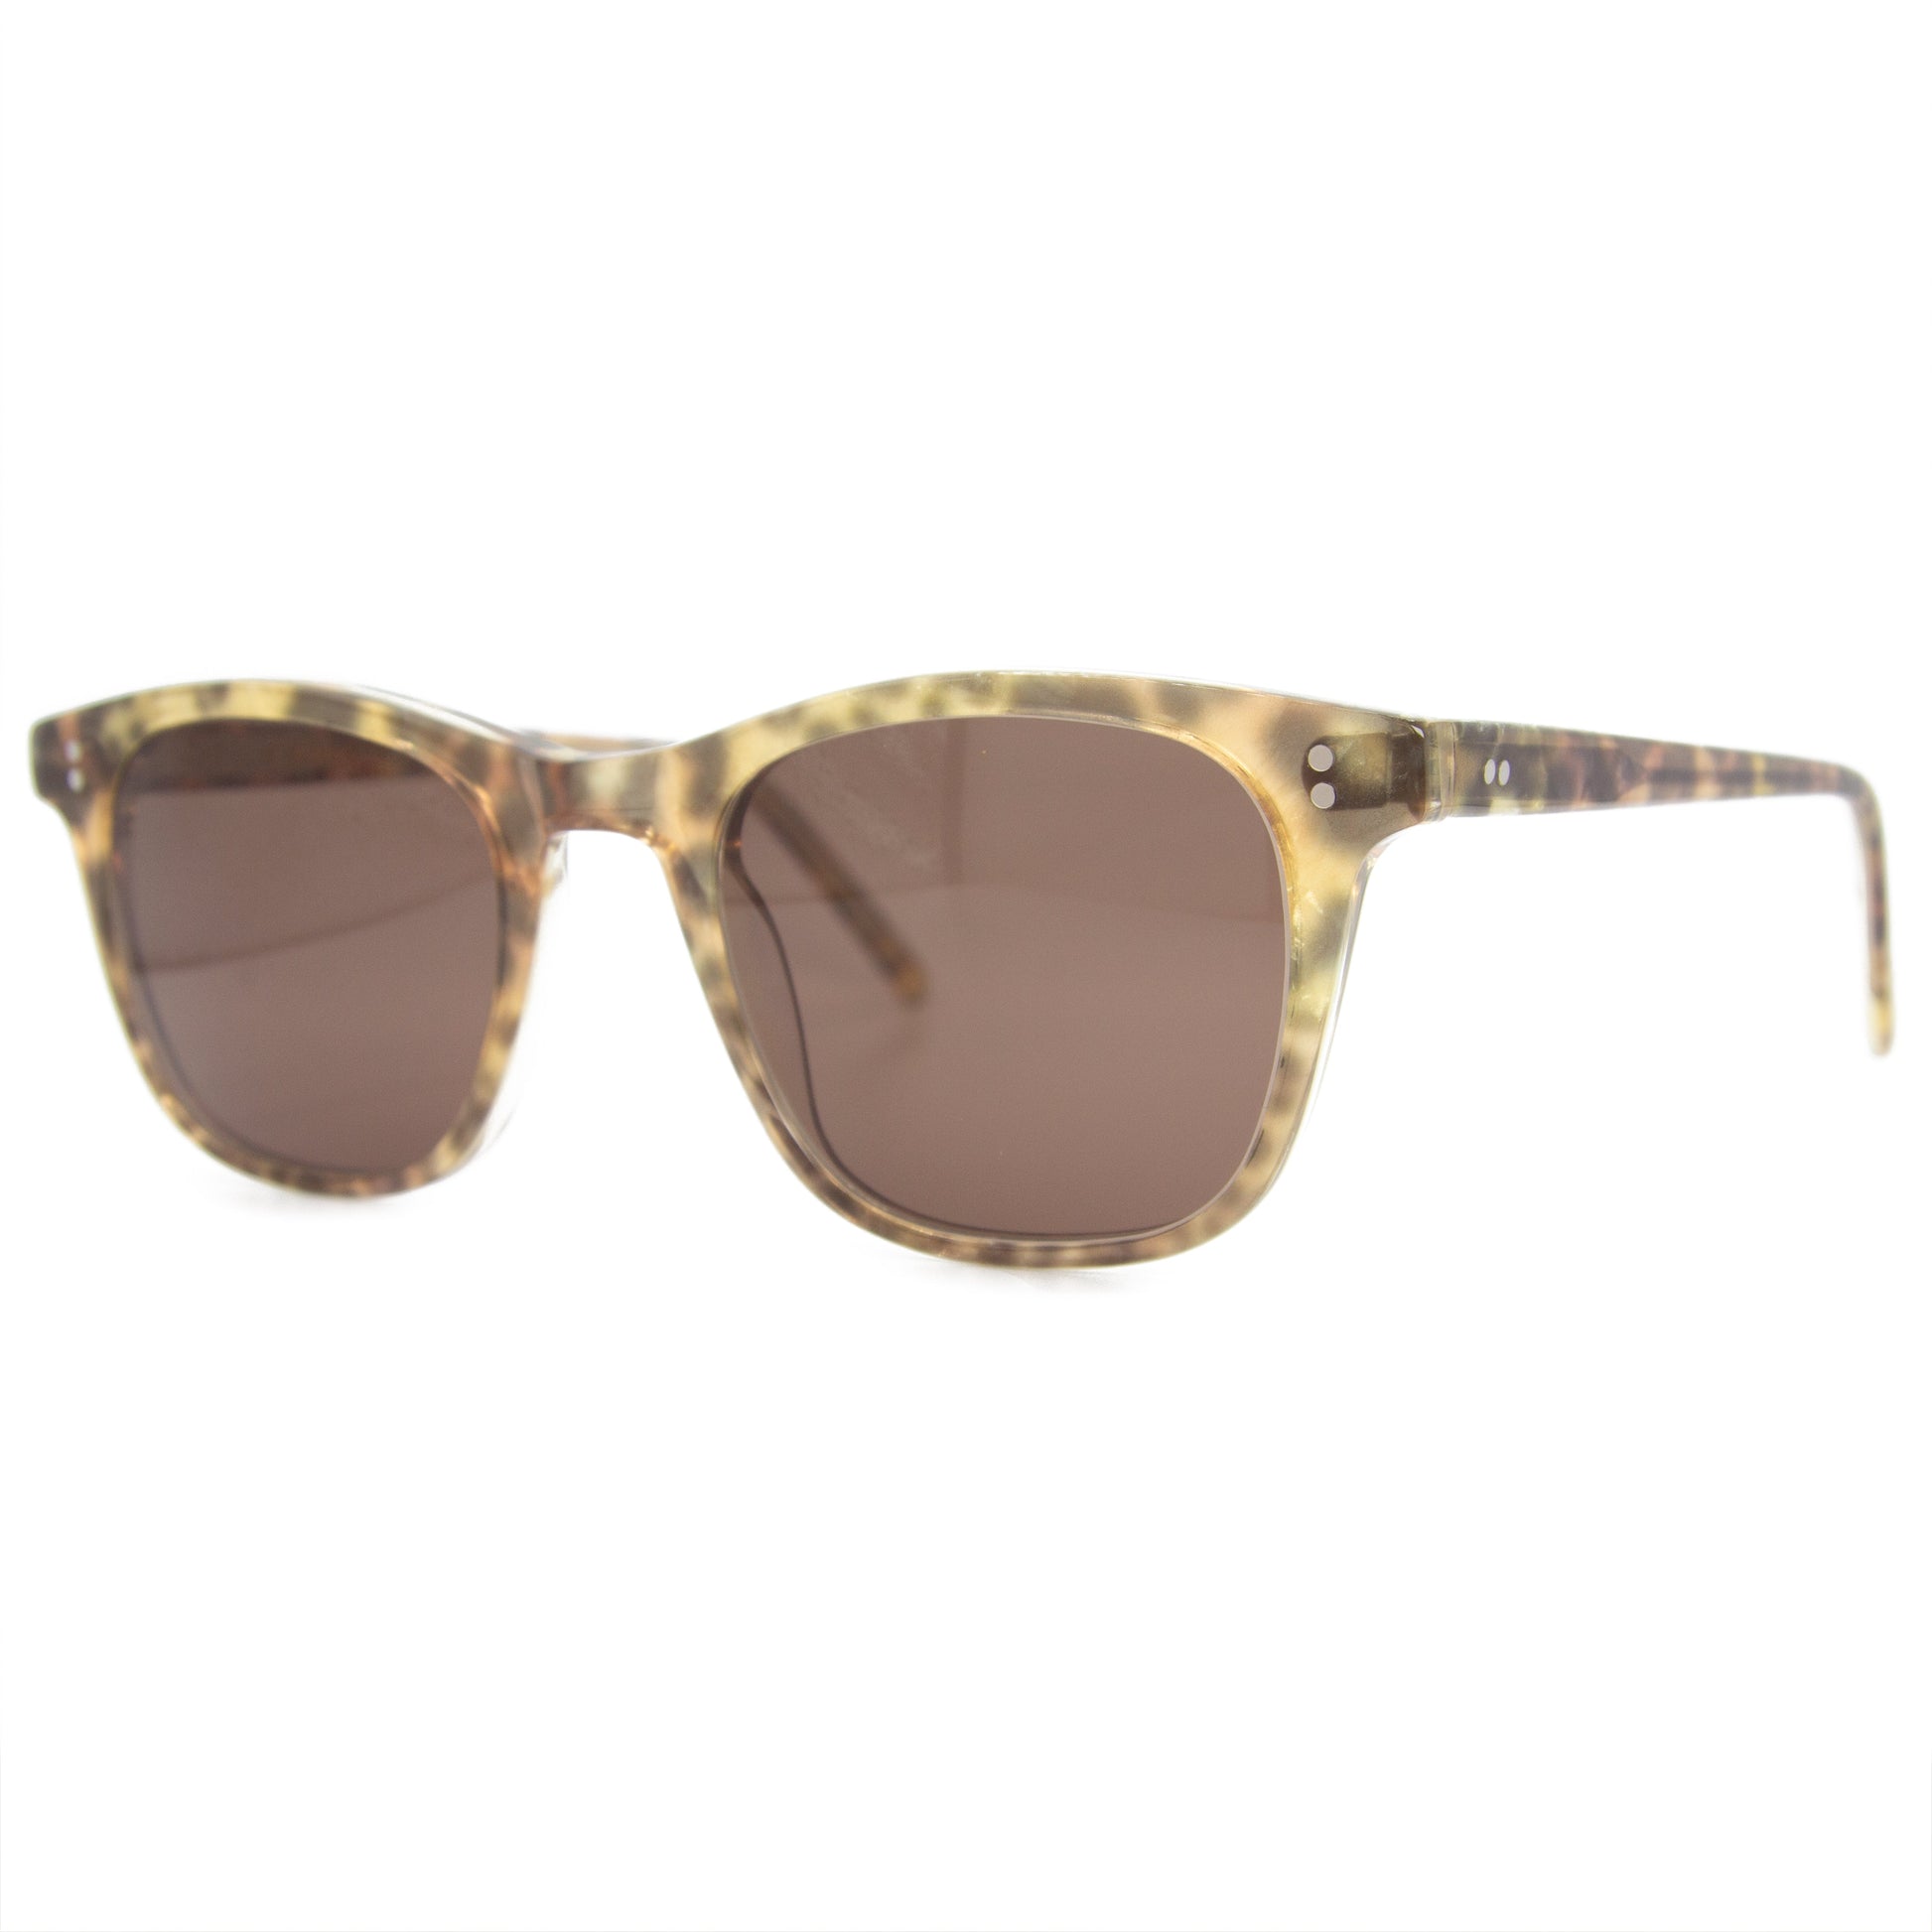 Soft Square Leopard Print Sunglasses